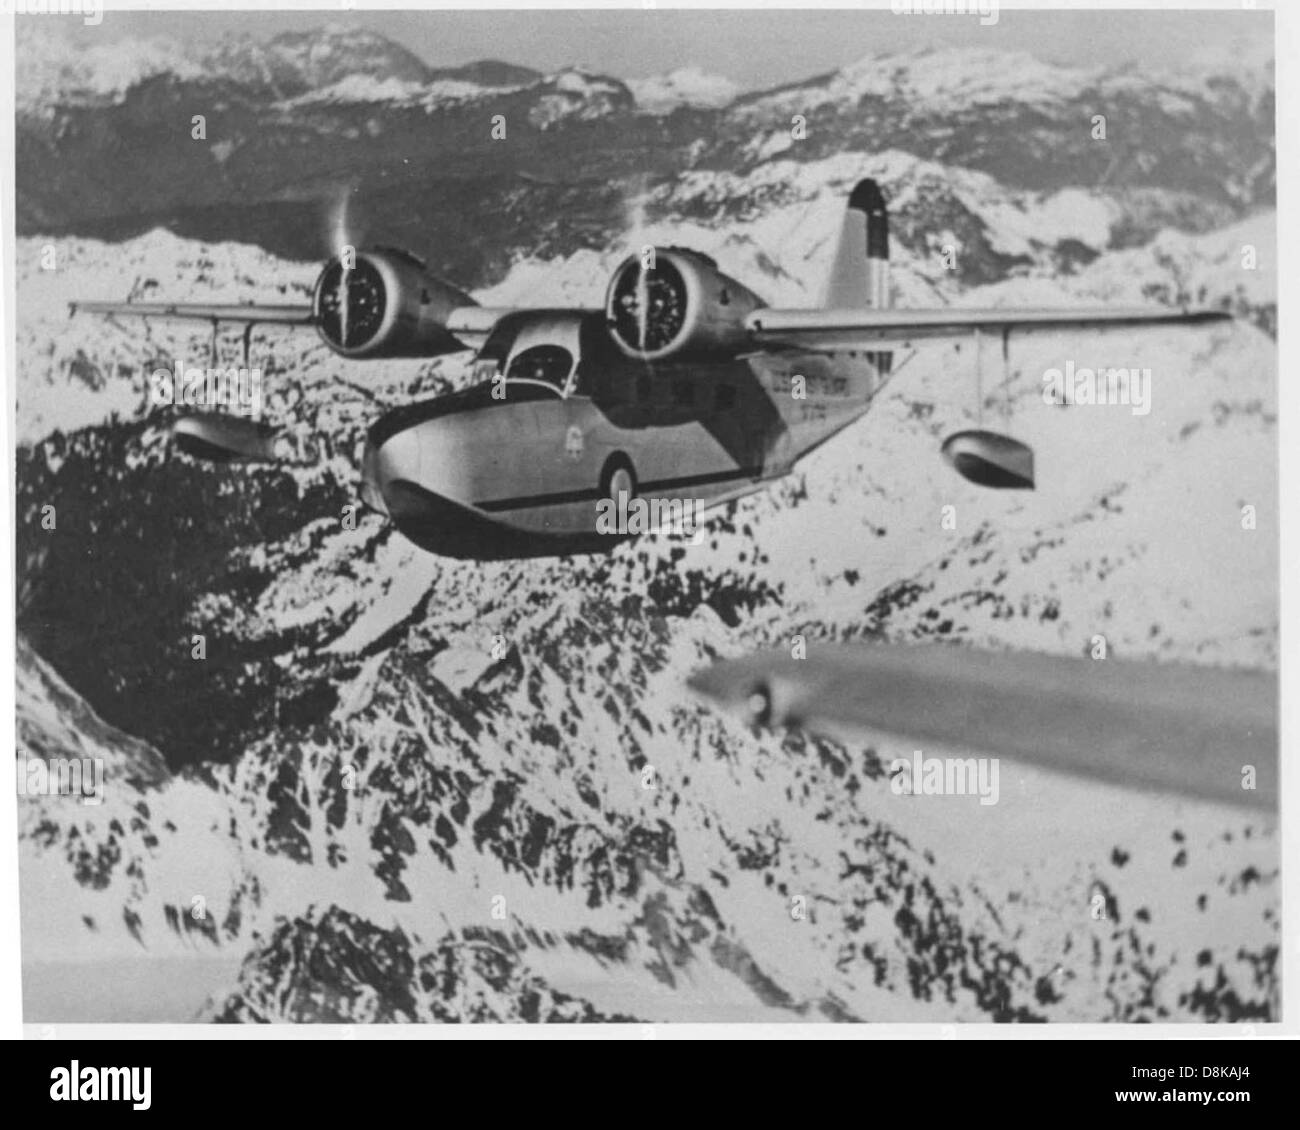 Vintage aircraft photos. Stock Photo